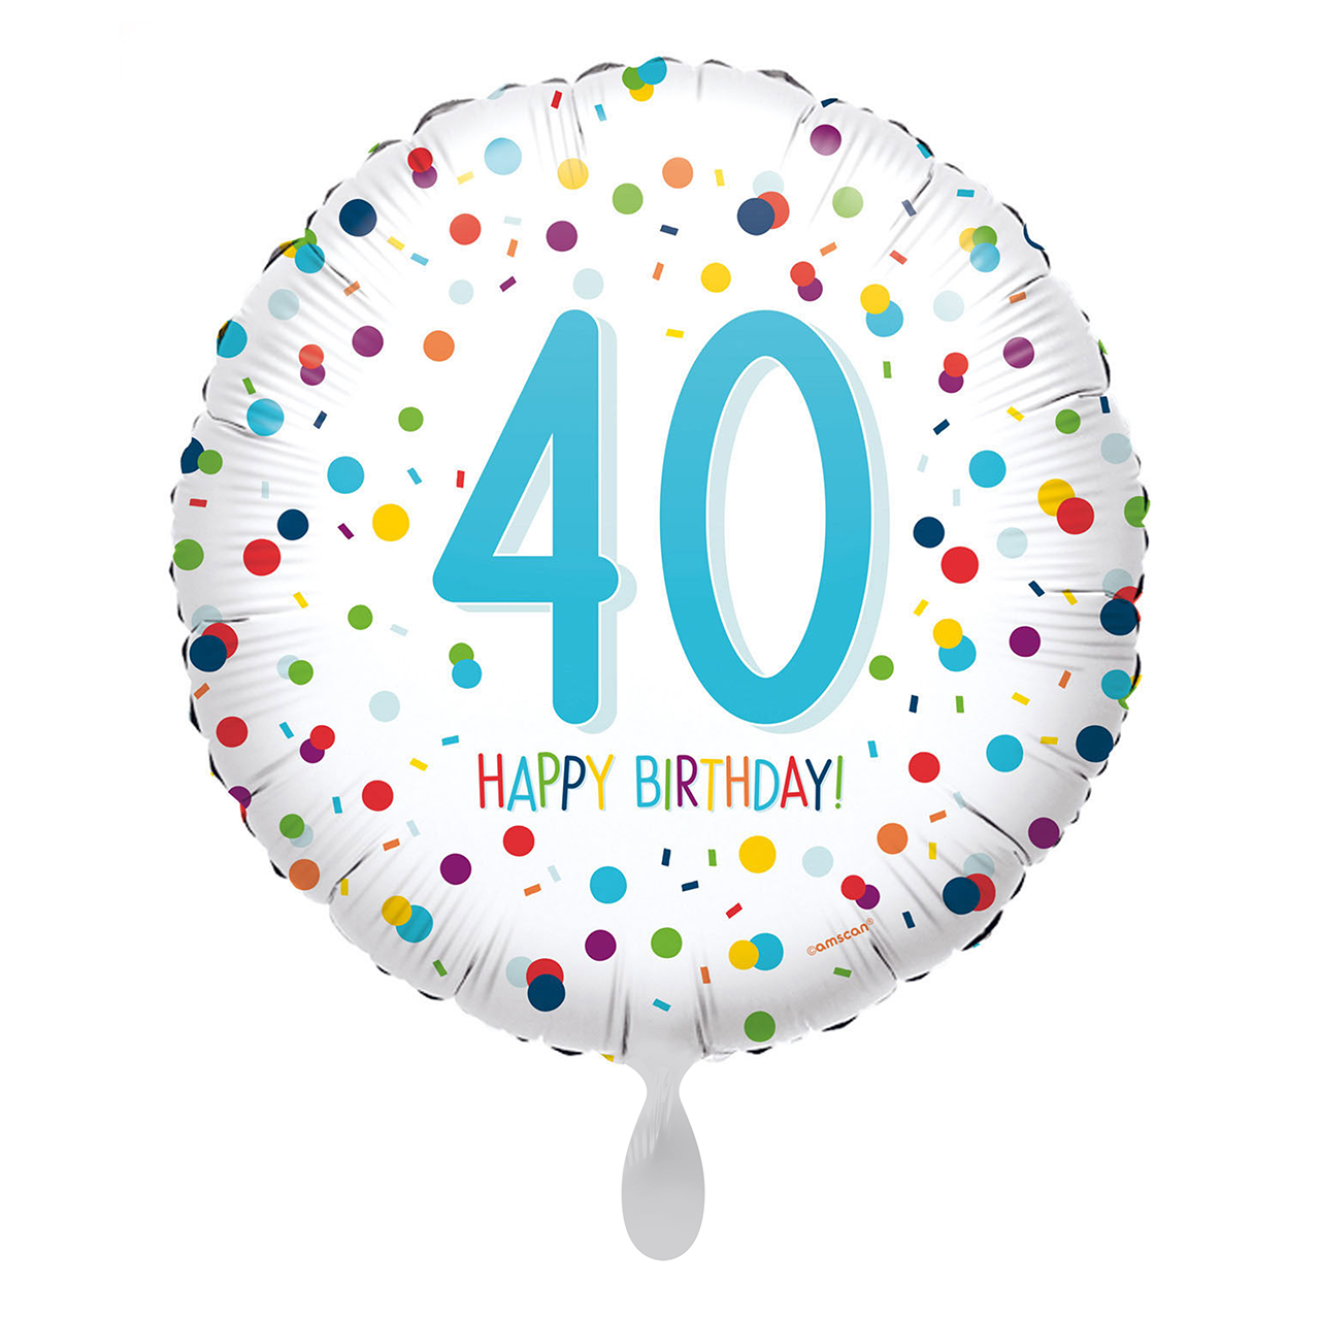 1 Balloon - EU Confetti Birthday 40